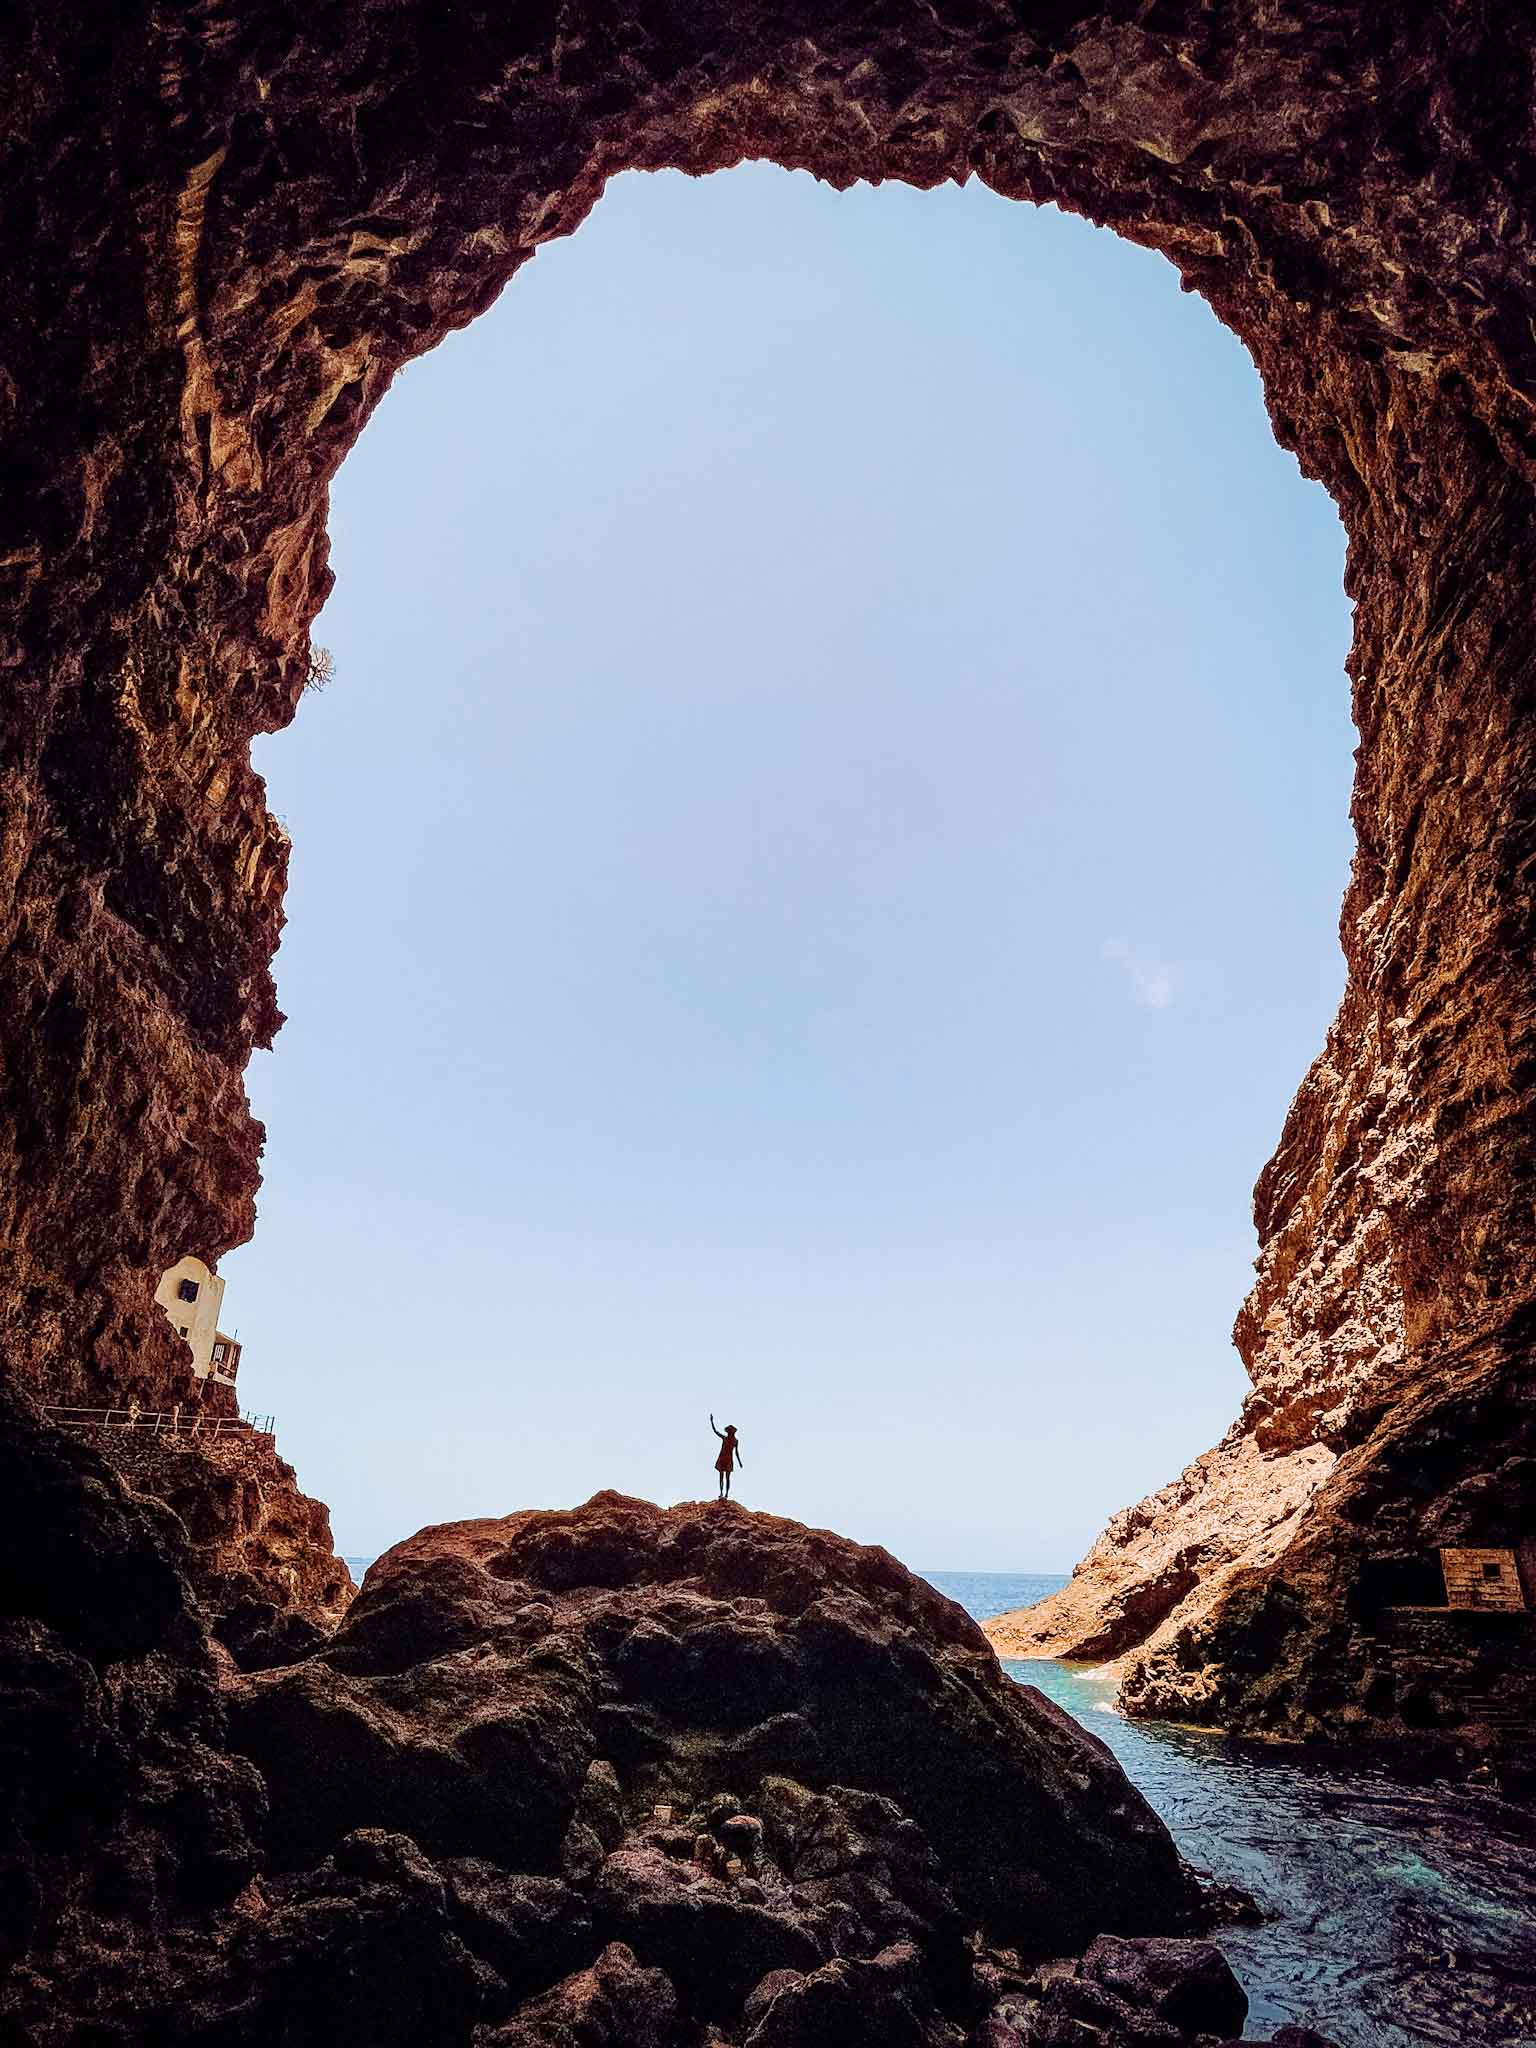 Best Instagram spots in La Palma Canary Islands - Porís de Candelaria village